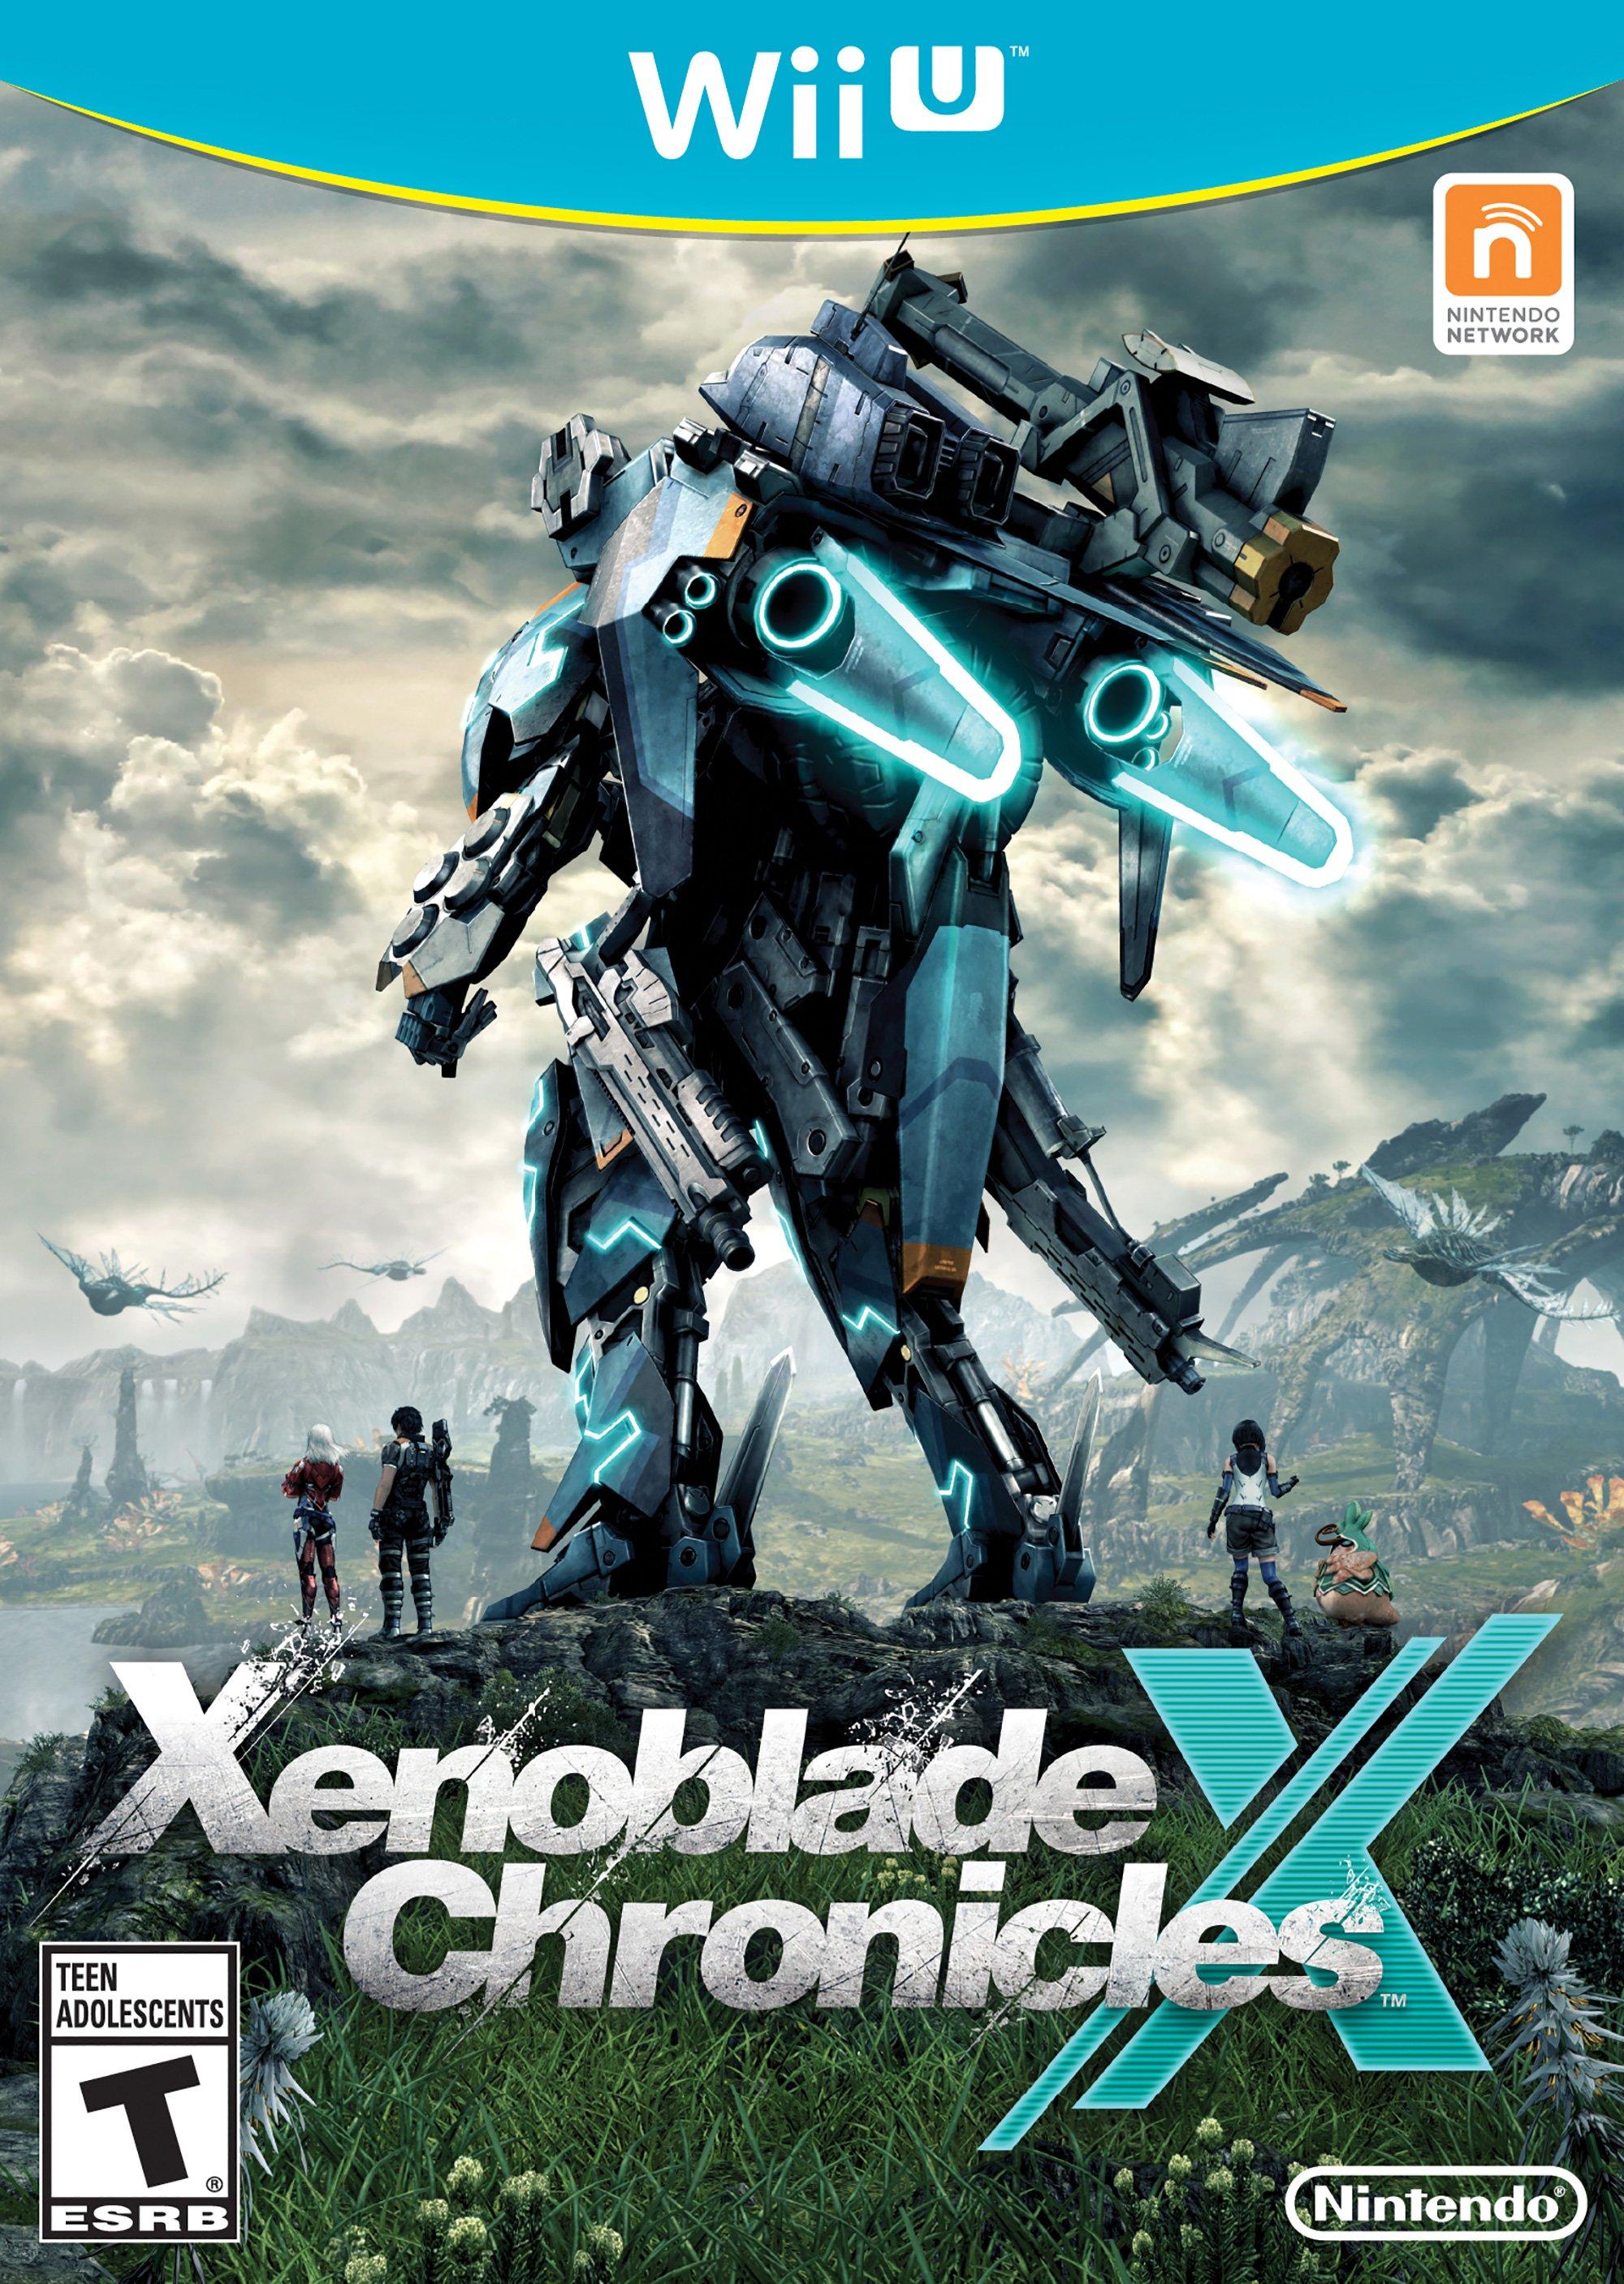 Xenoblade Chronicles X - Nintendo Wii U